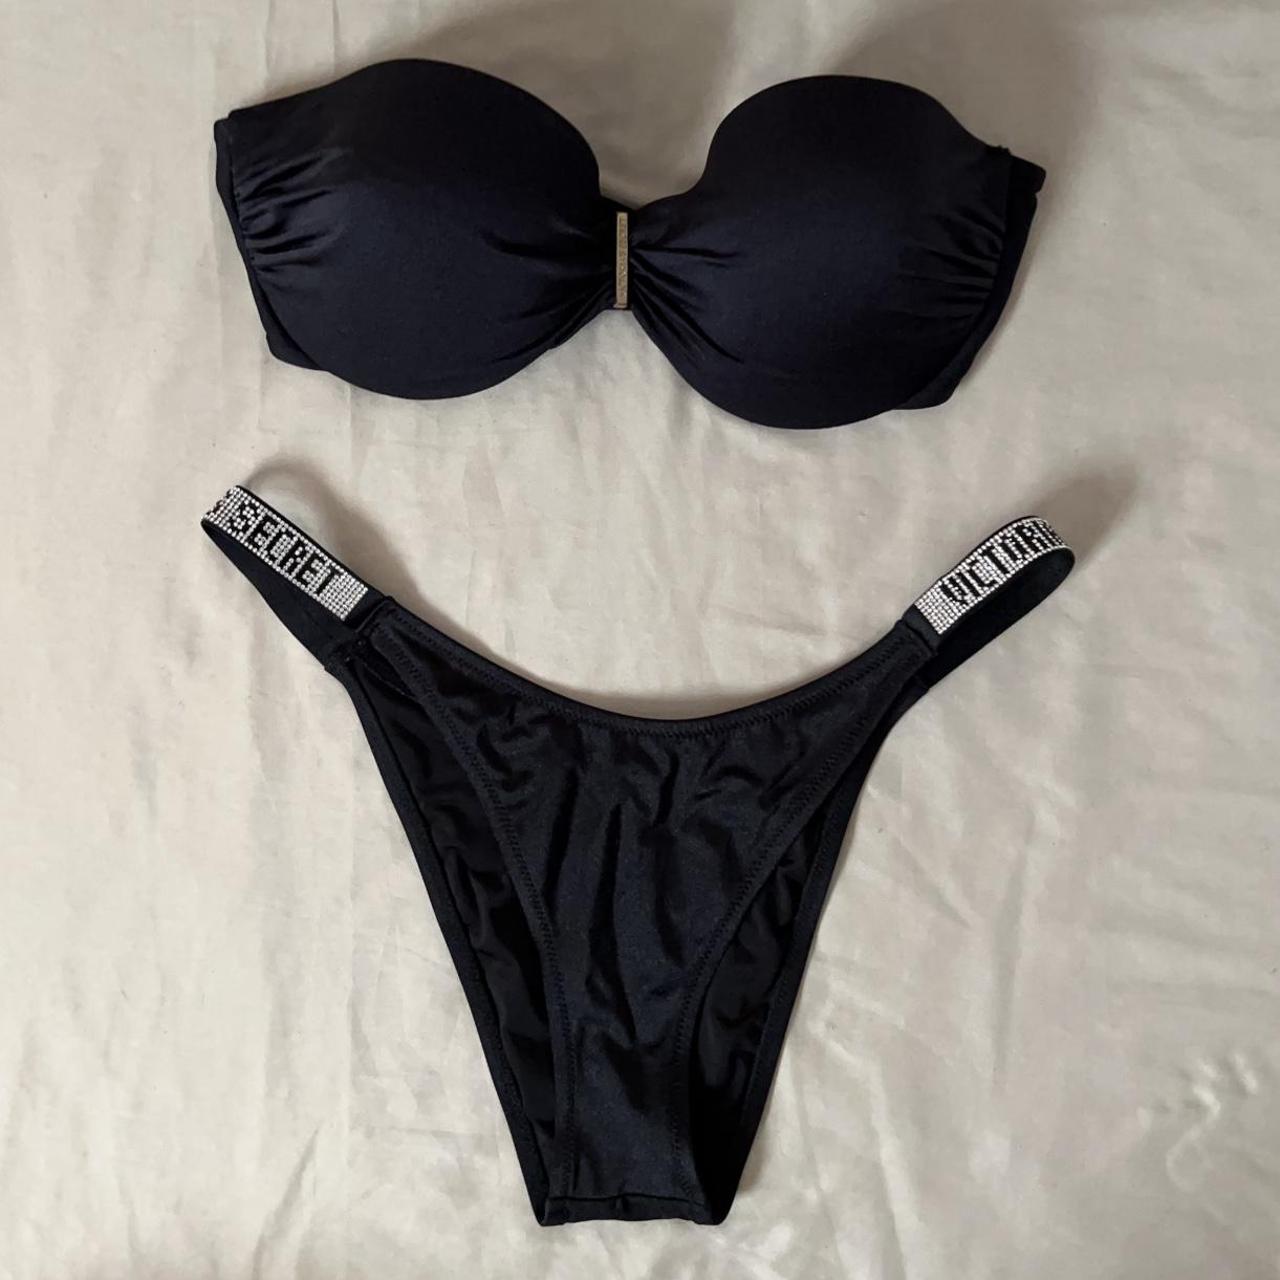 Victoria's Secret Women's Black and Silver Bikinis-and-tankini-sets | Depop